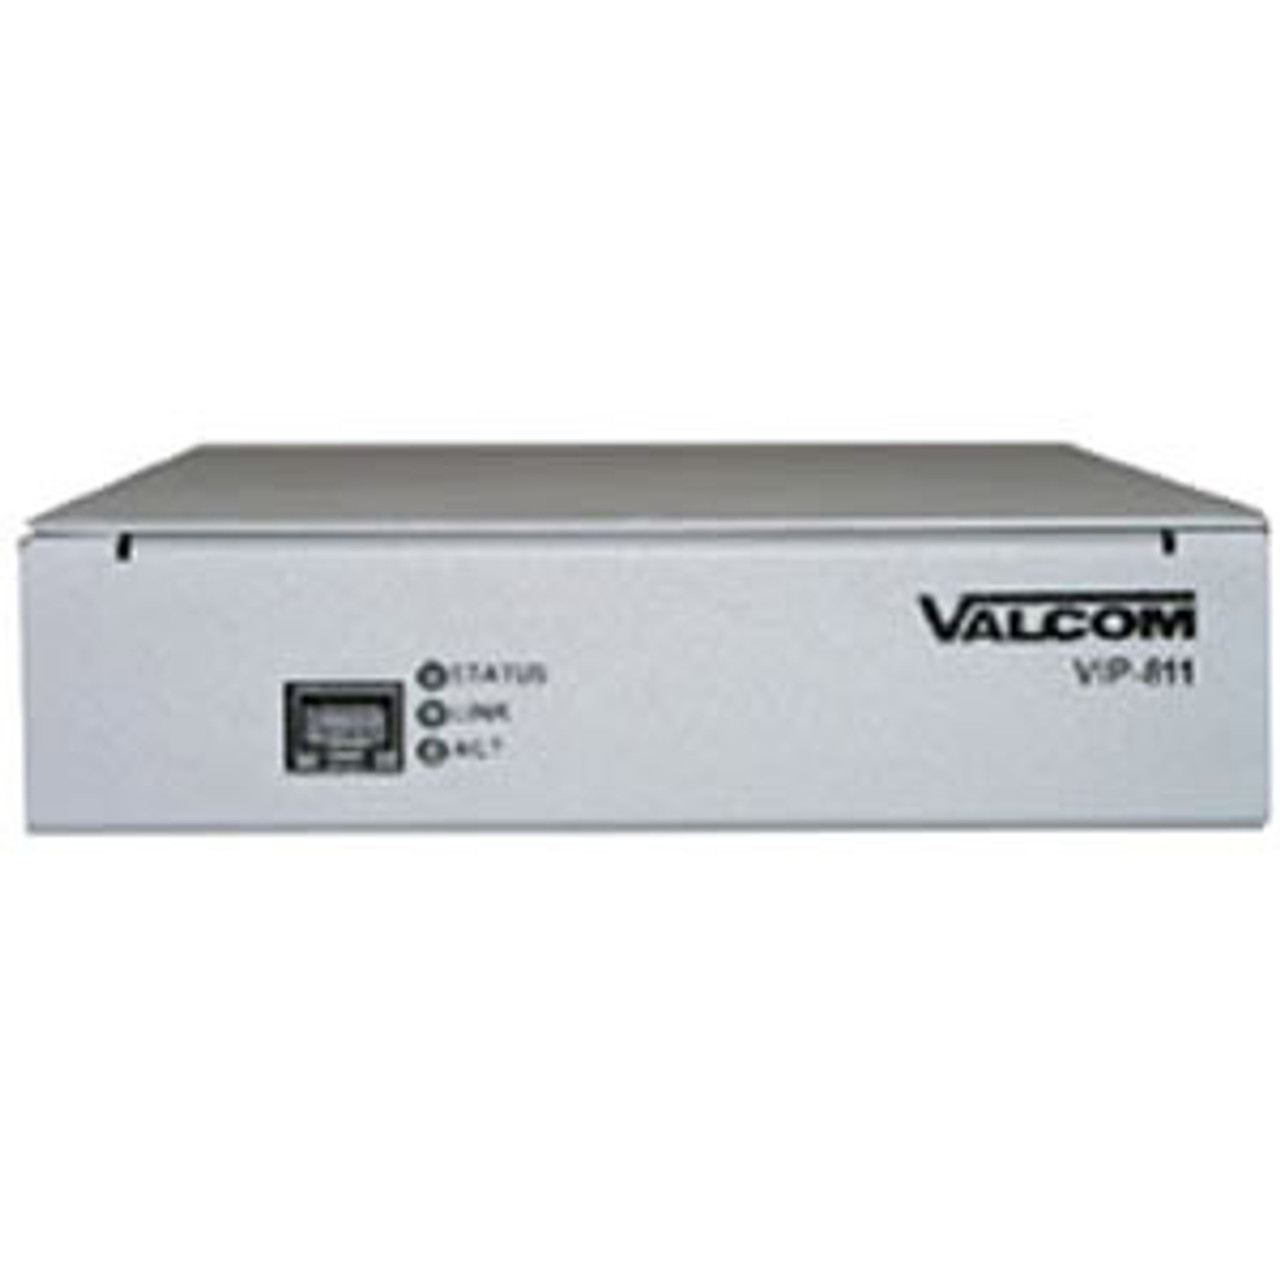 VIP-811 valcom VIP-811 VoIP Gateway 1 x 10/100Base-TX , 1 x FXS